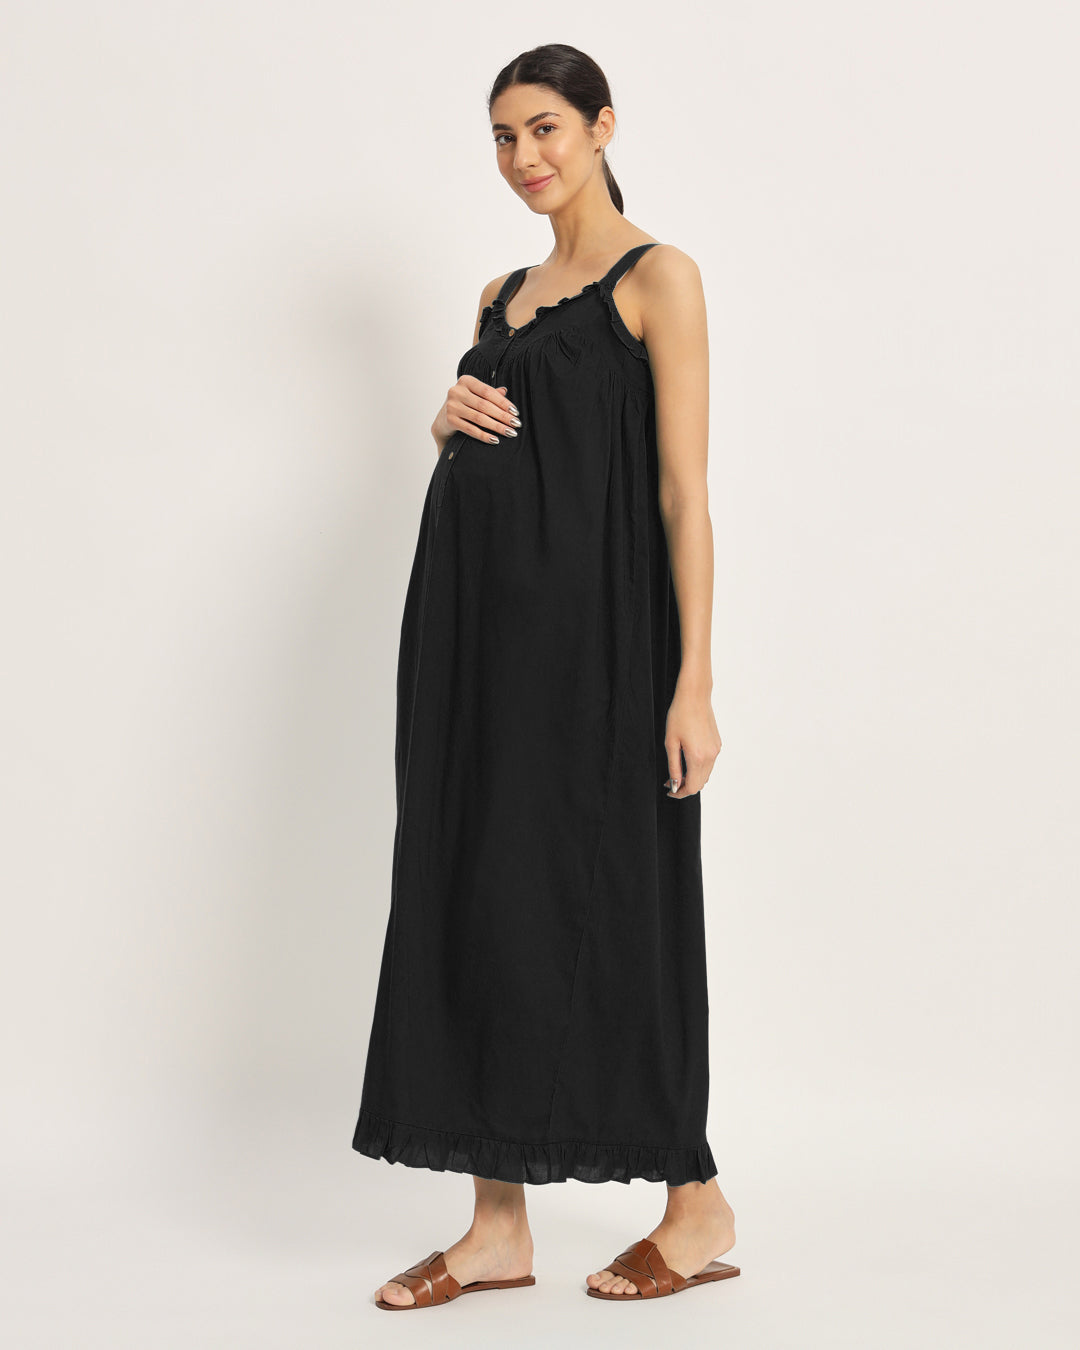 Classic Black Preggo Pretty Maternity & Nursing Dress